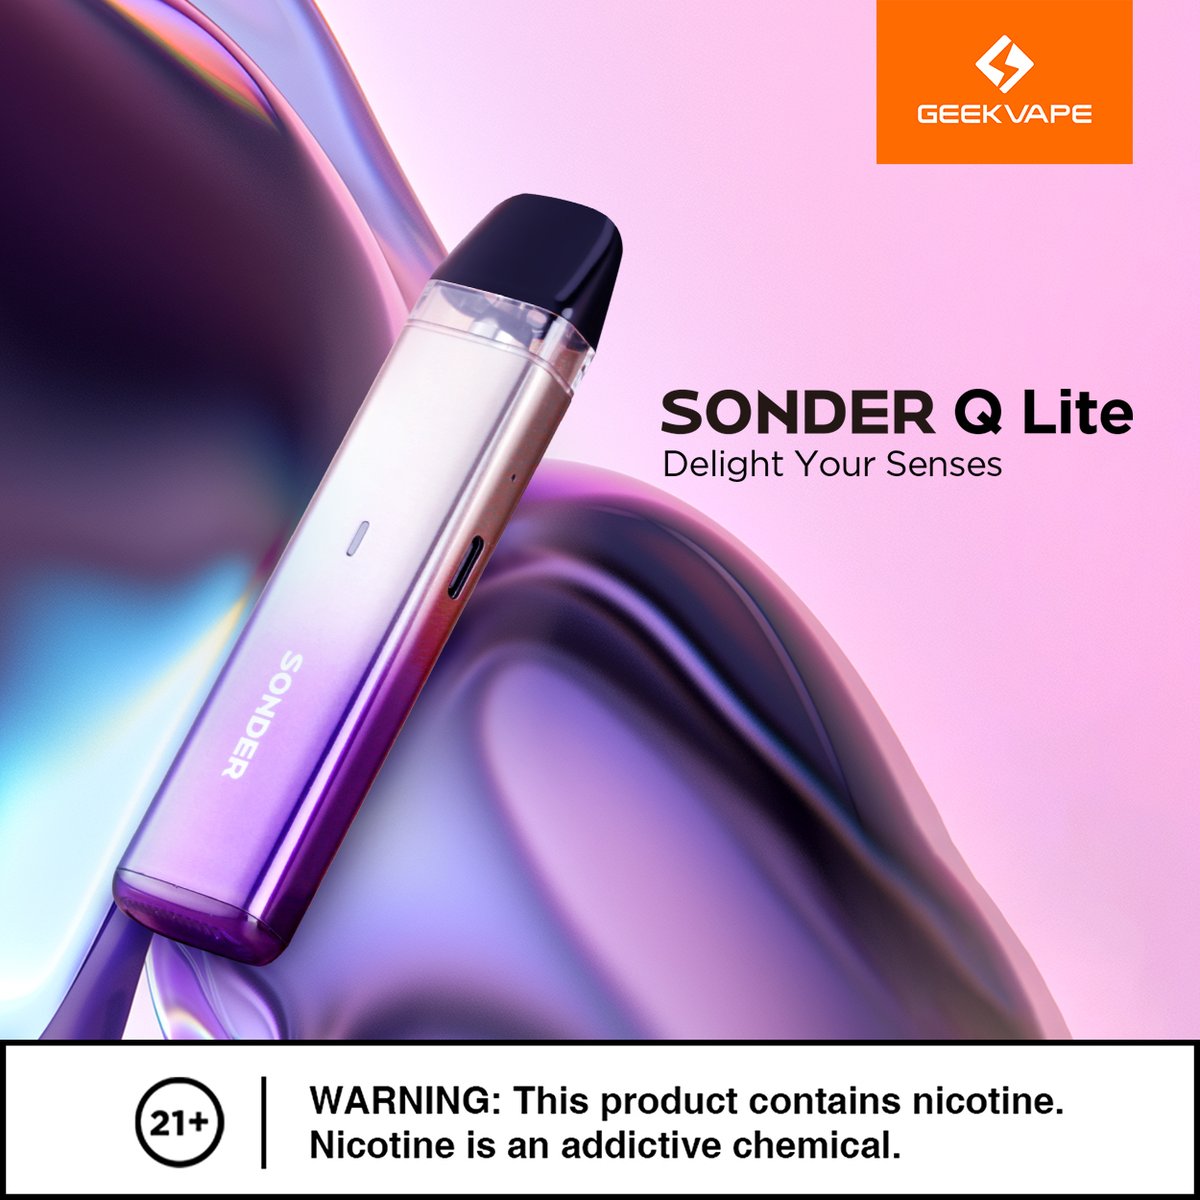 Delight your senses with the new Sonder Q Lite. Experience robust flavor in a sleek, durable design. 🔥
#SonderQLite
 #VapeLife
#geekvape
#geekvp
#geekvaptech